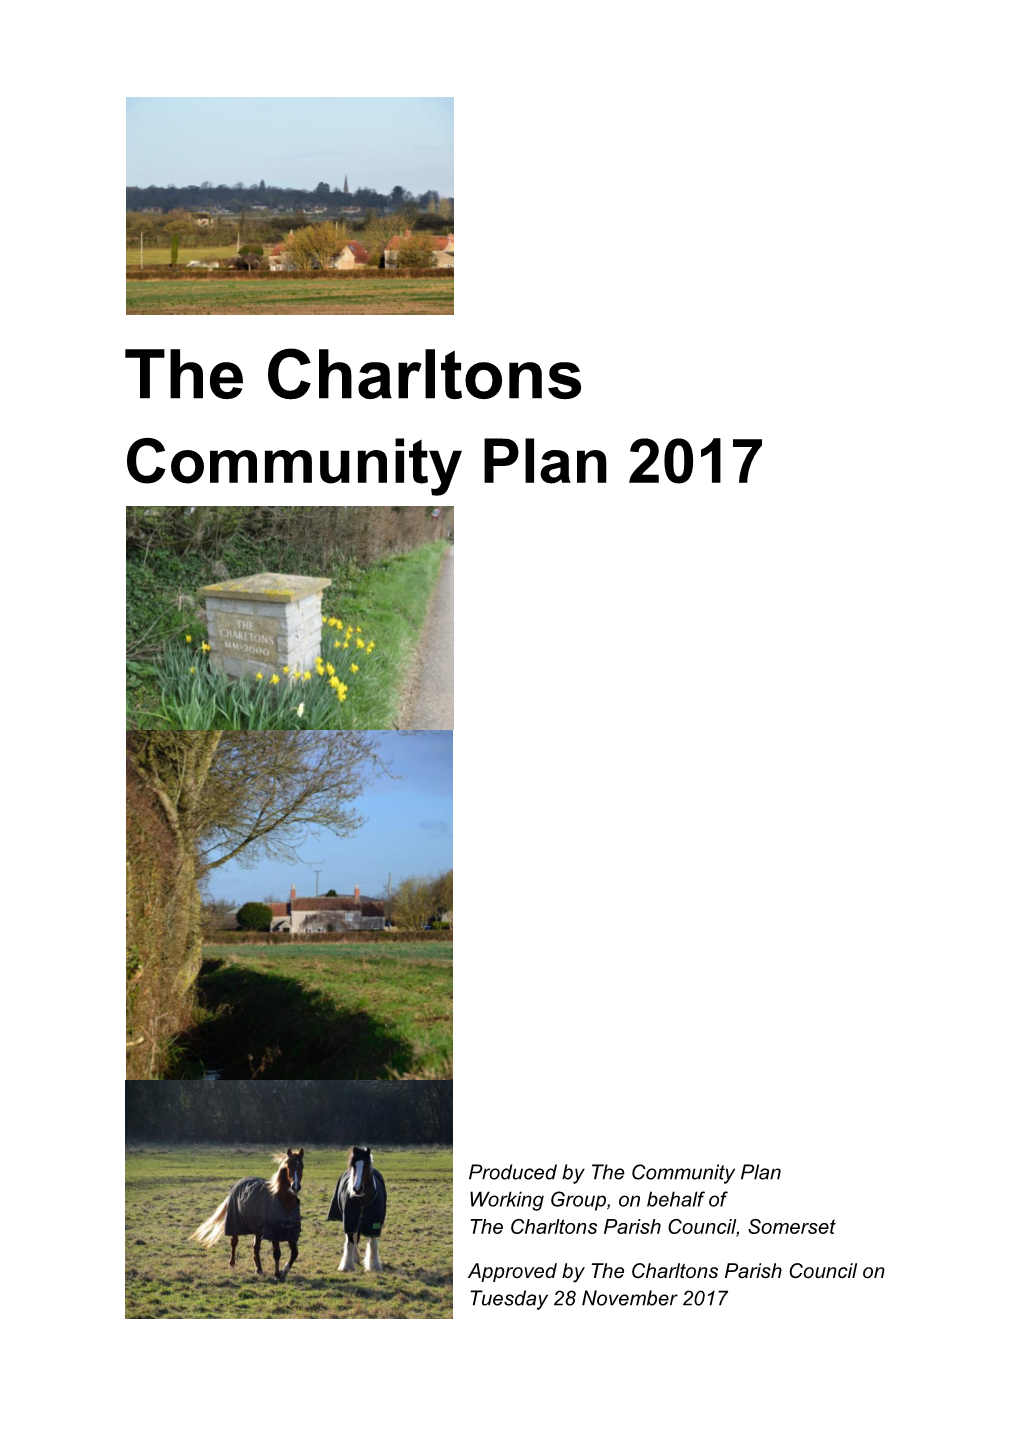 The Charltons Community Plan 2017